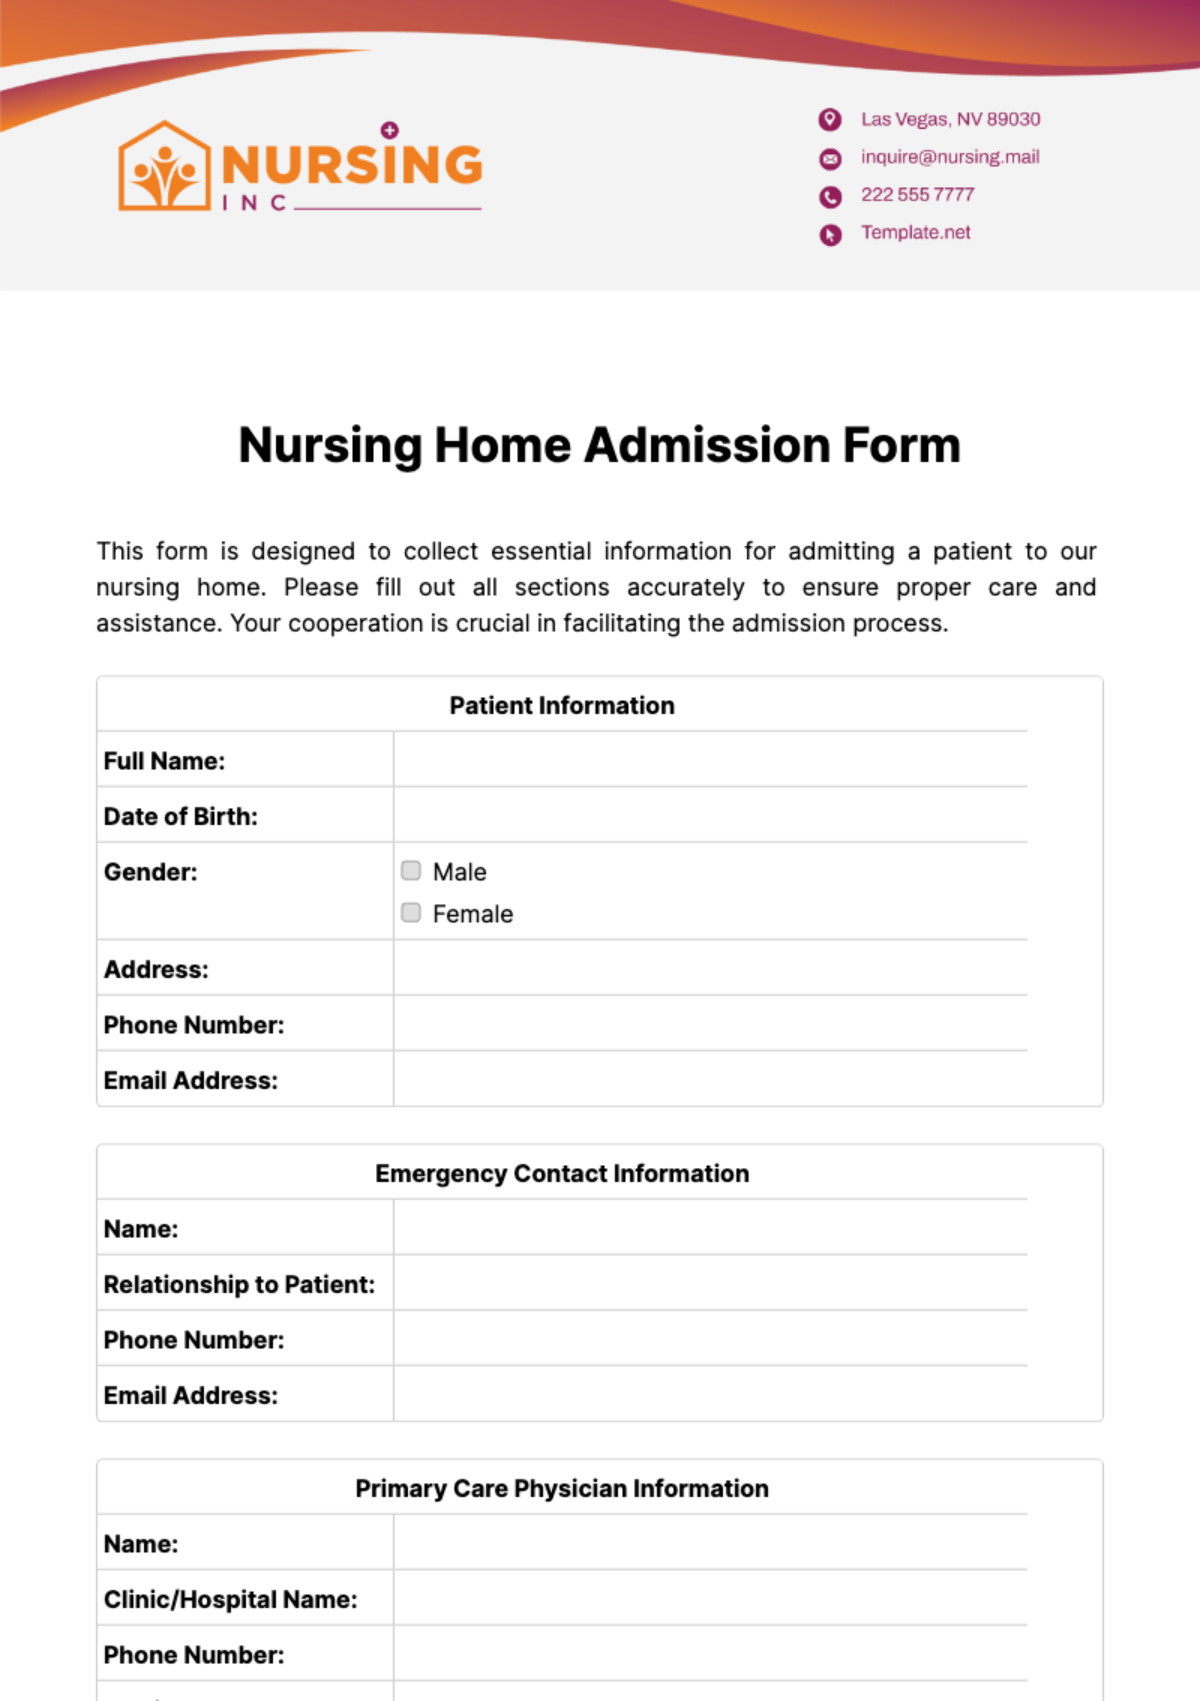 Nursing Home Admission Form Template